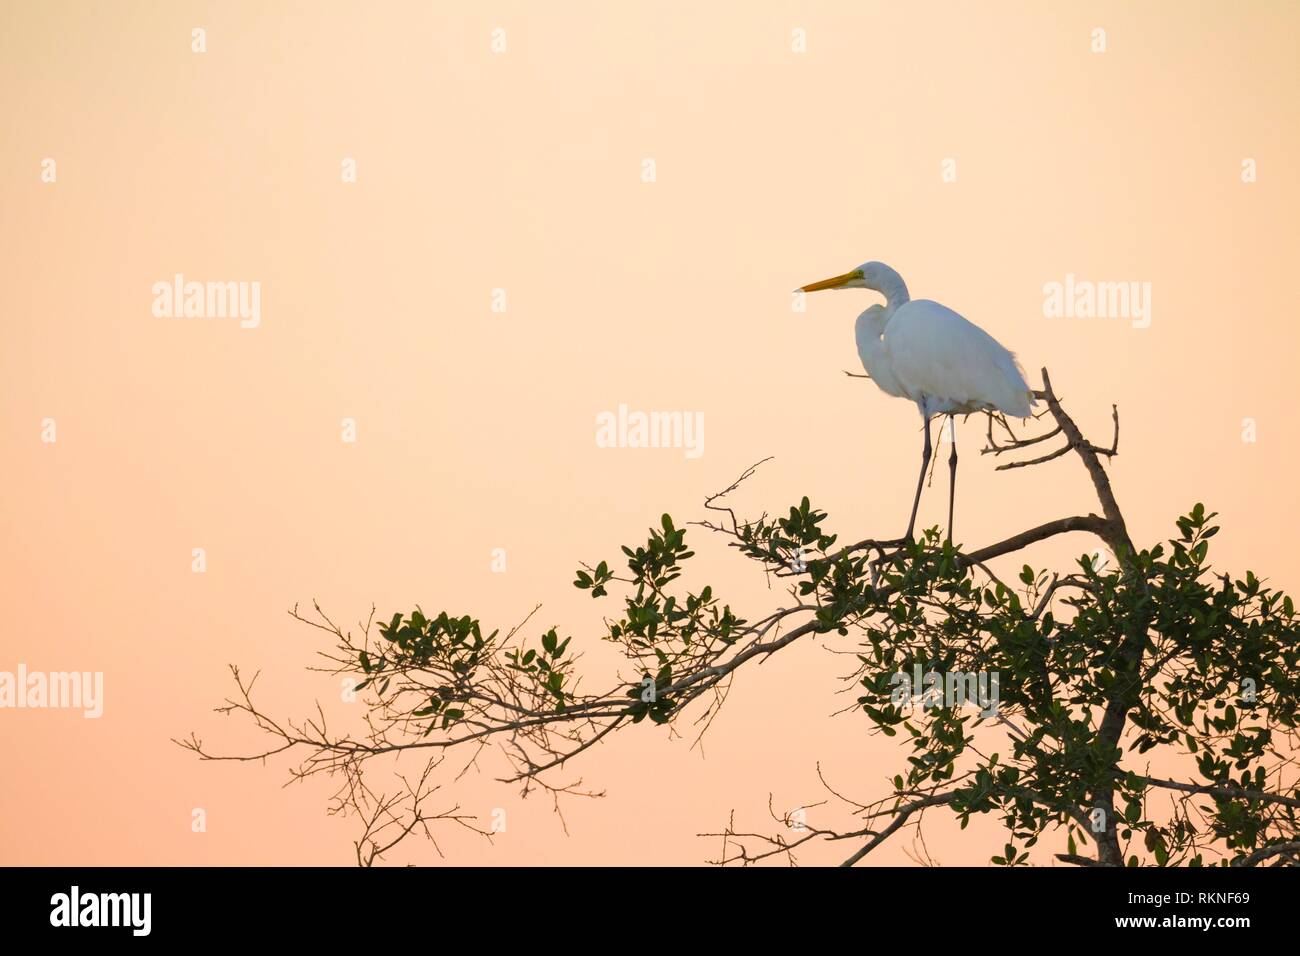 Great egret, Egretta alba, on tree. Stock Photo